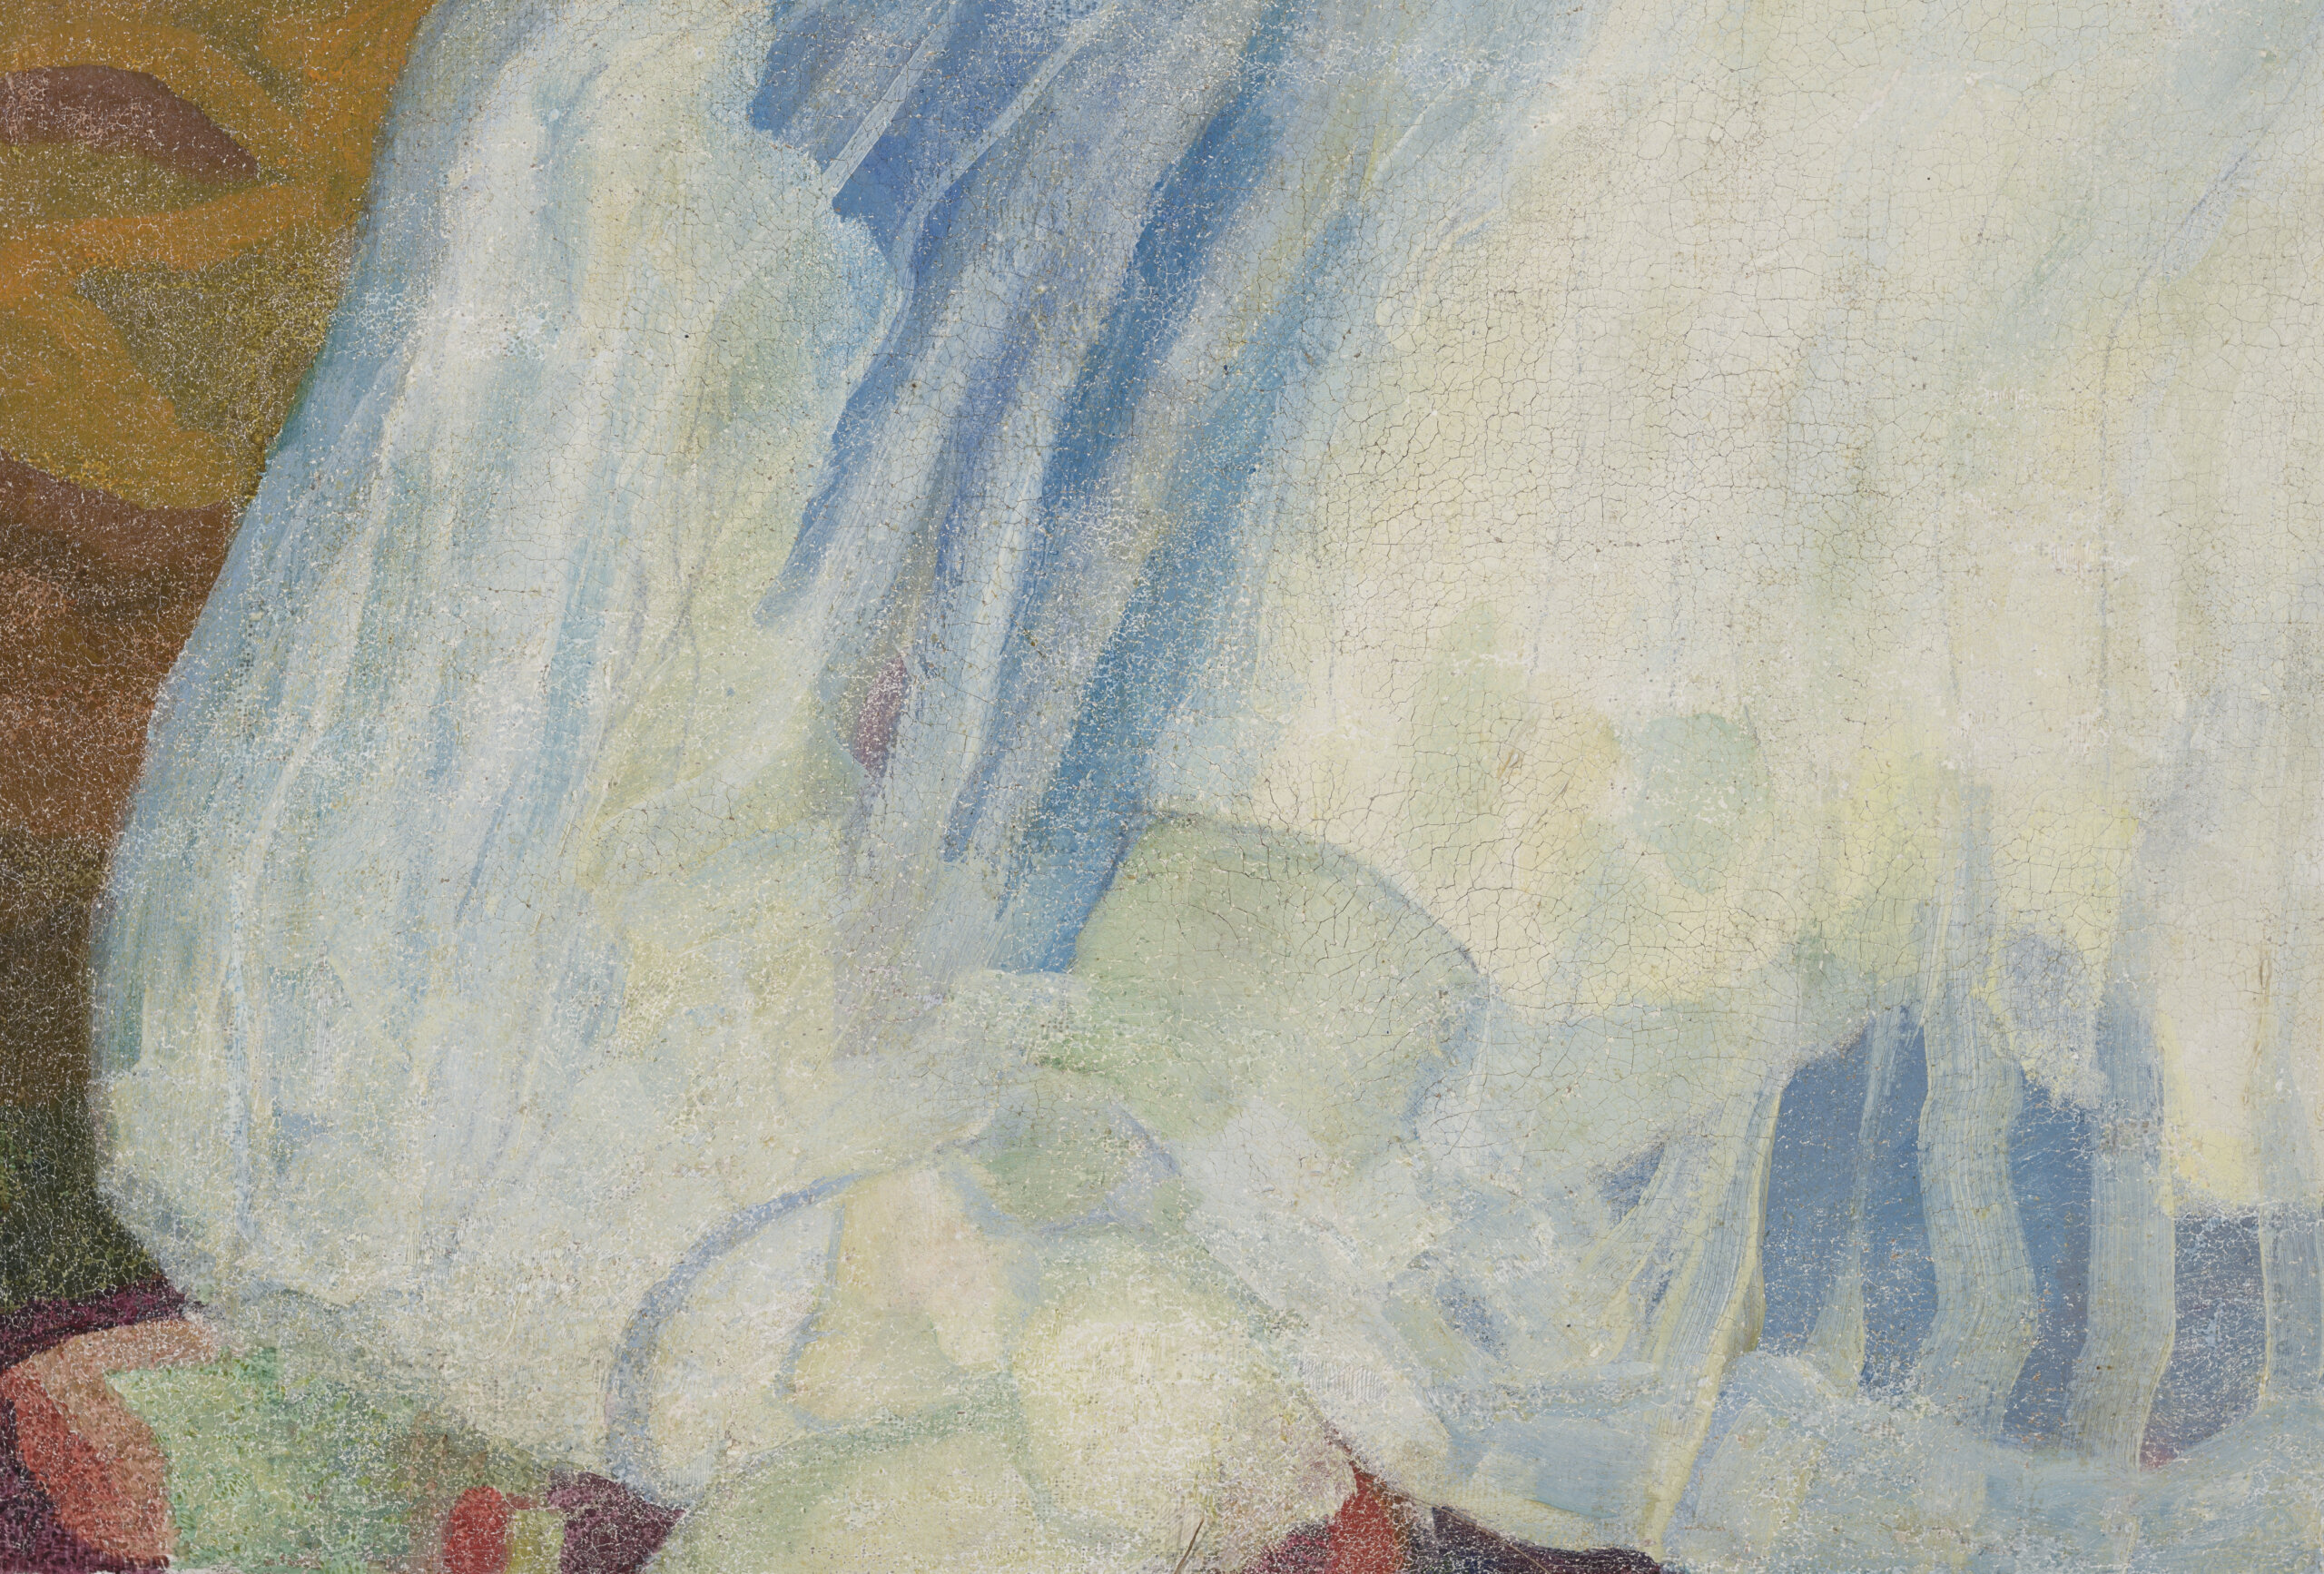 Voldemar Kangro-Pool “Tütarlaps kummipuu taustal”, 1918. 117 x 96 cm.